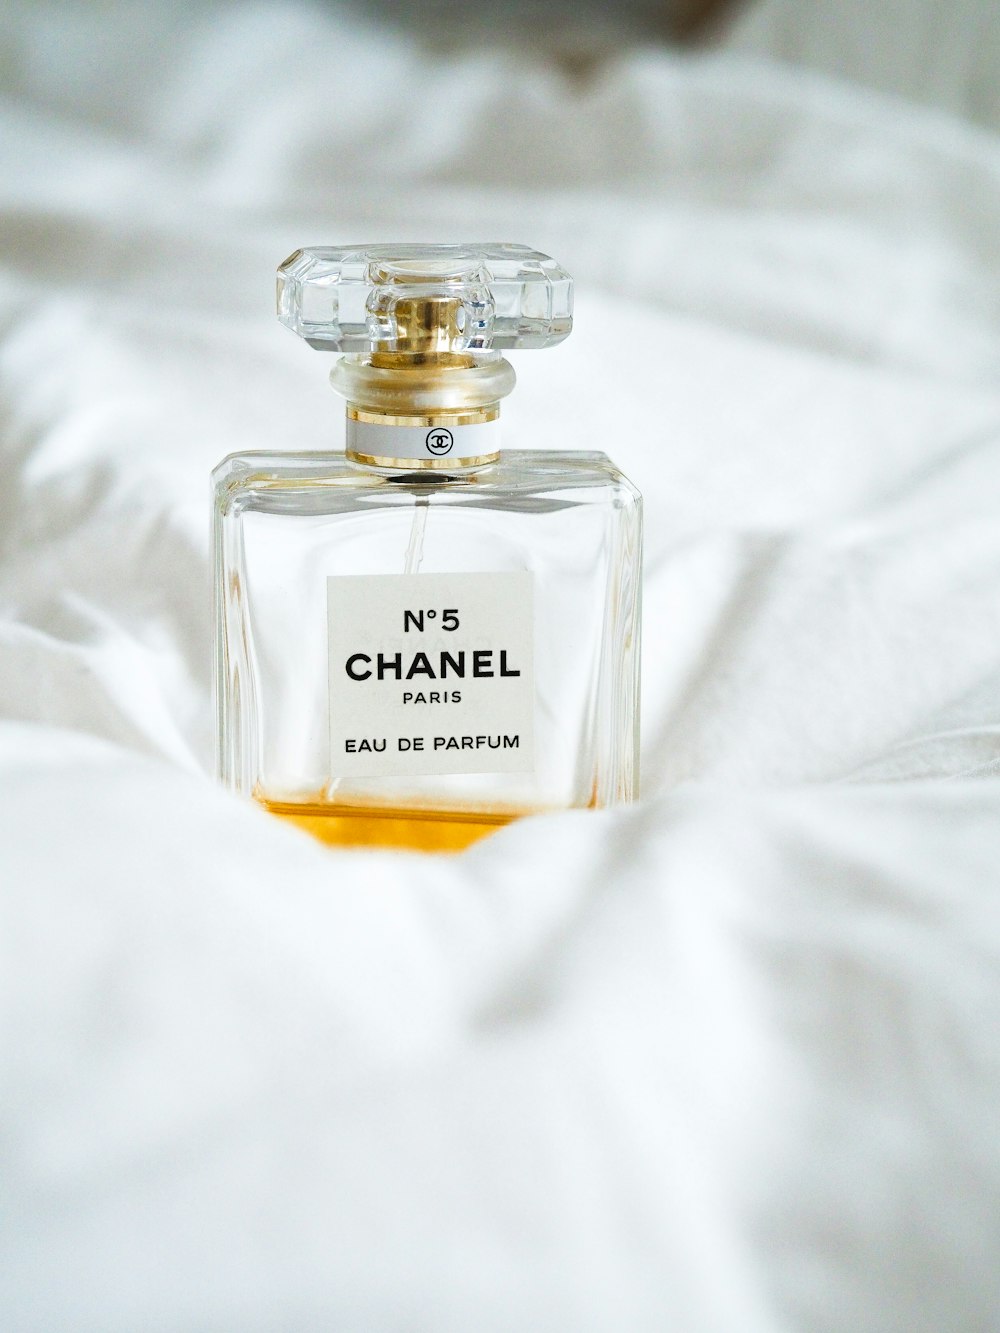 N5 Chanel fragrance bottle on white surface